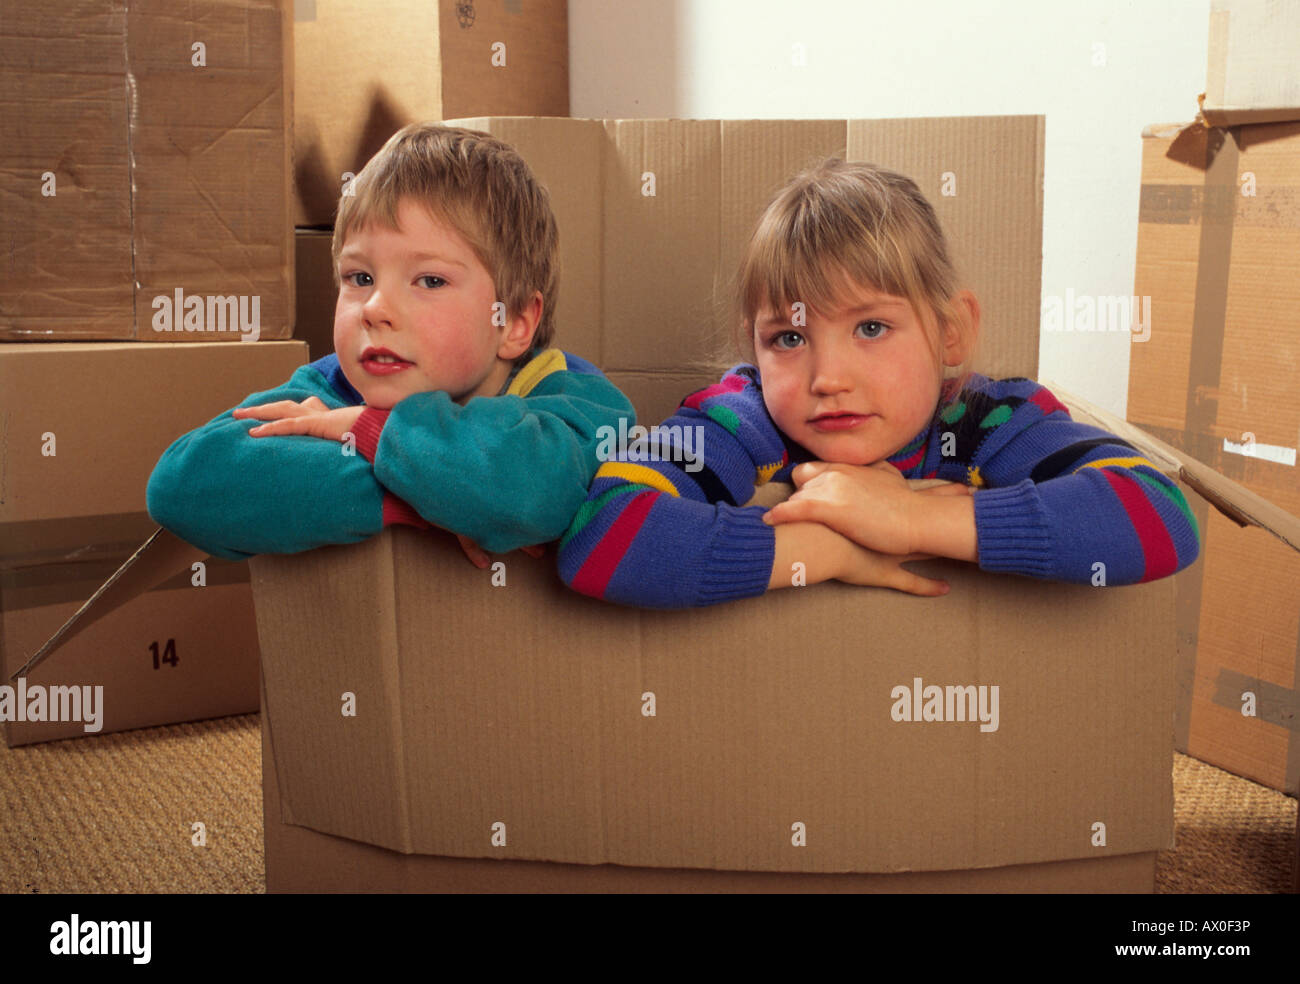 Boy and girl sitting in a cardboard box Stock Photo